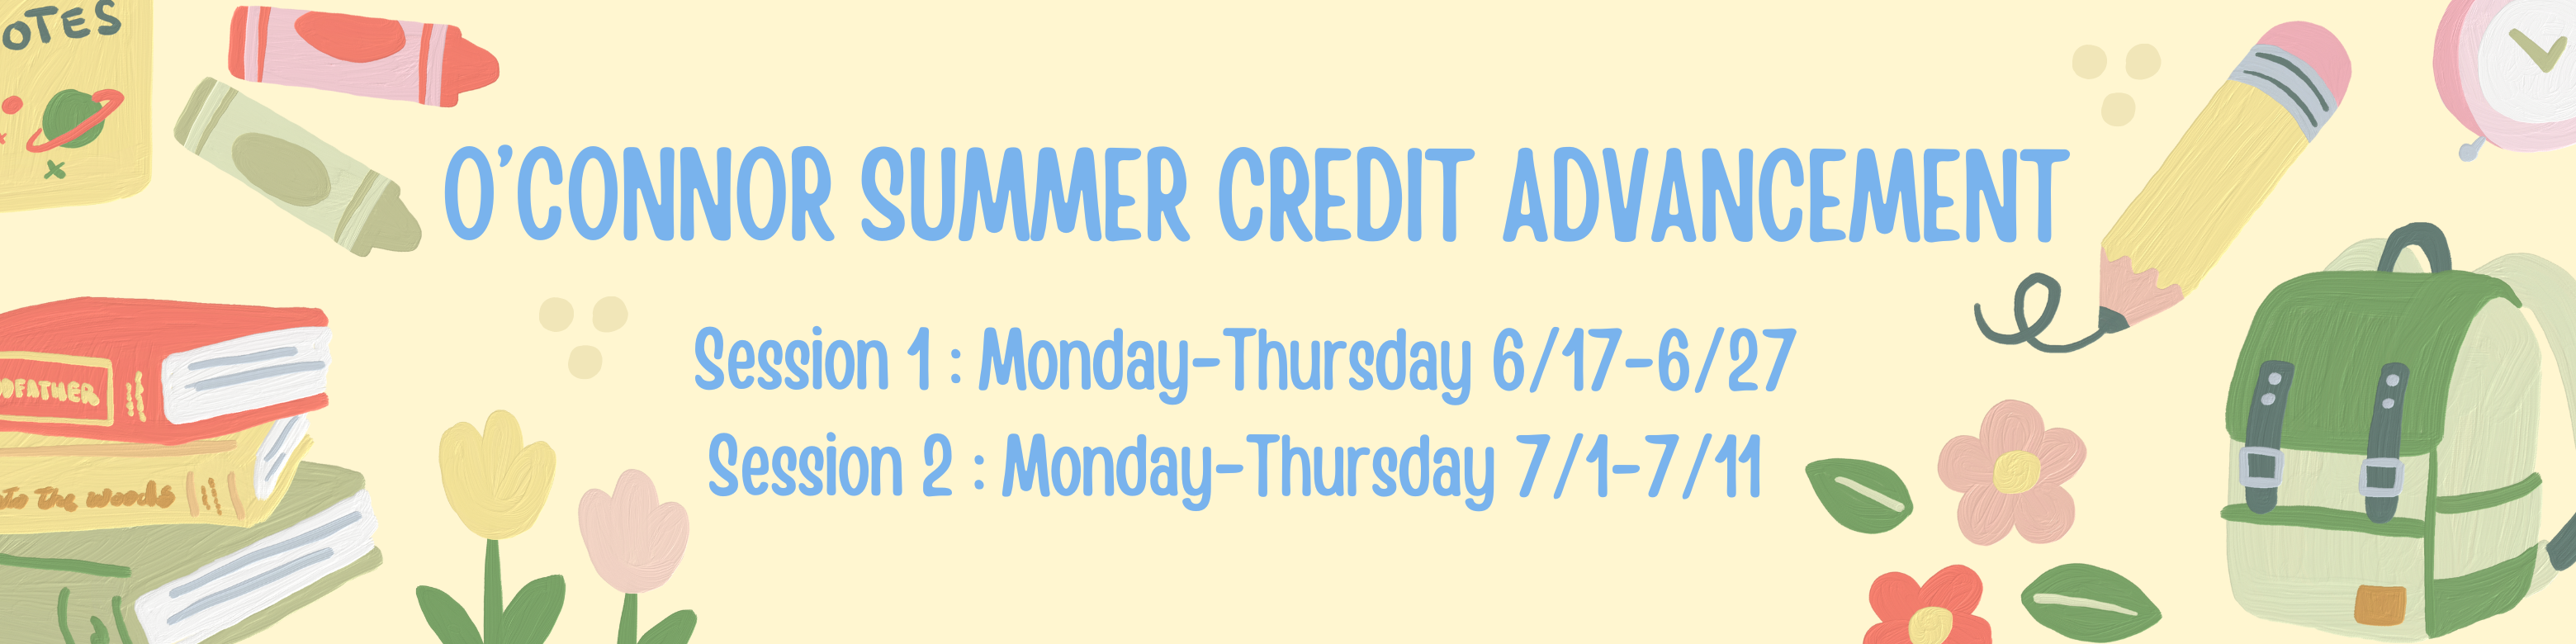 O'Connor Summer Credit Advancement Banner